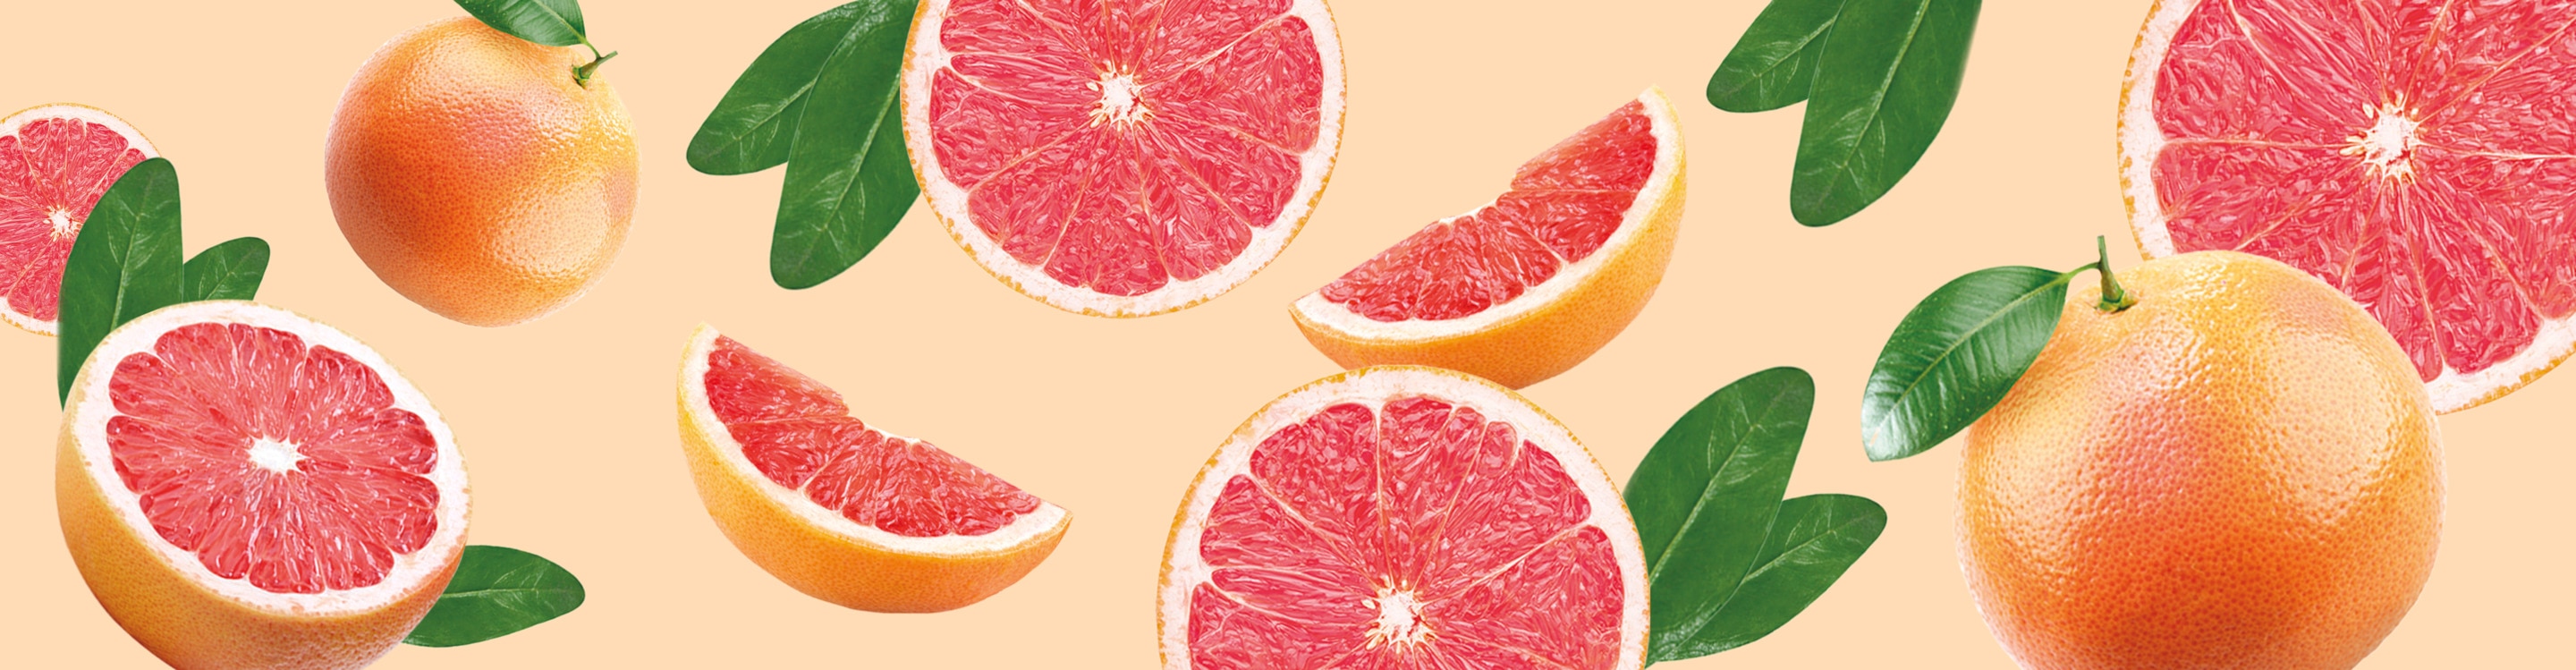 grapefruit ingredients